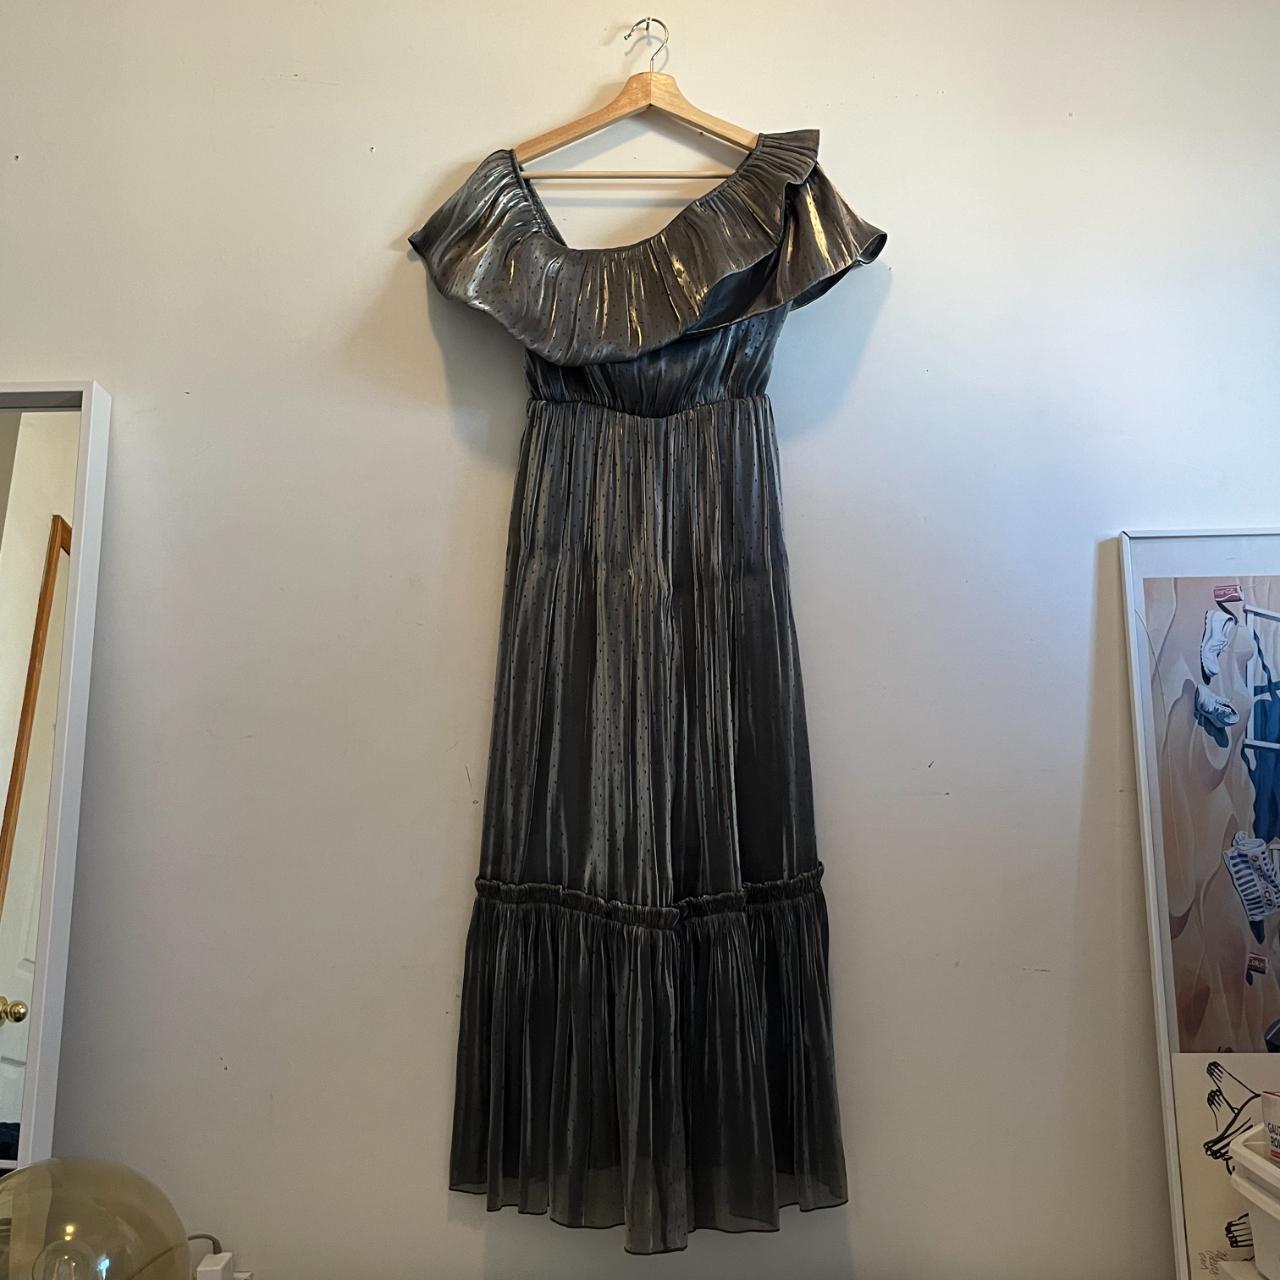 Product Image 2 - Three Floor Moonstone Silver Dress
—
Fun